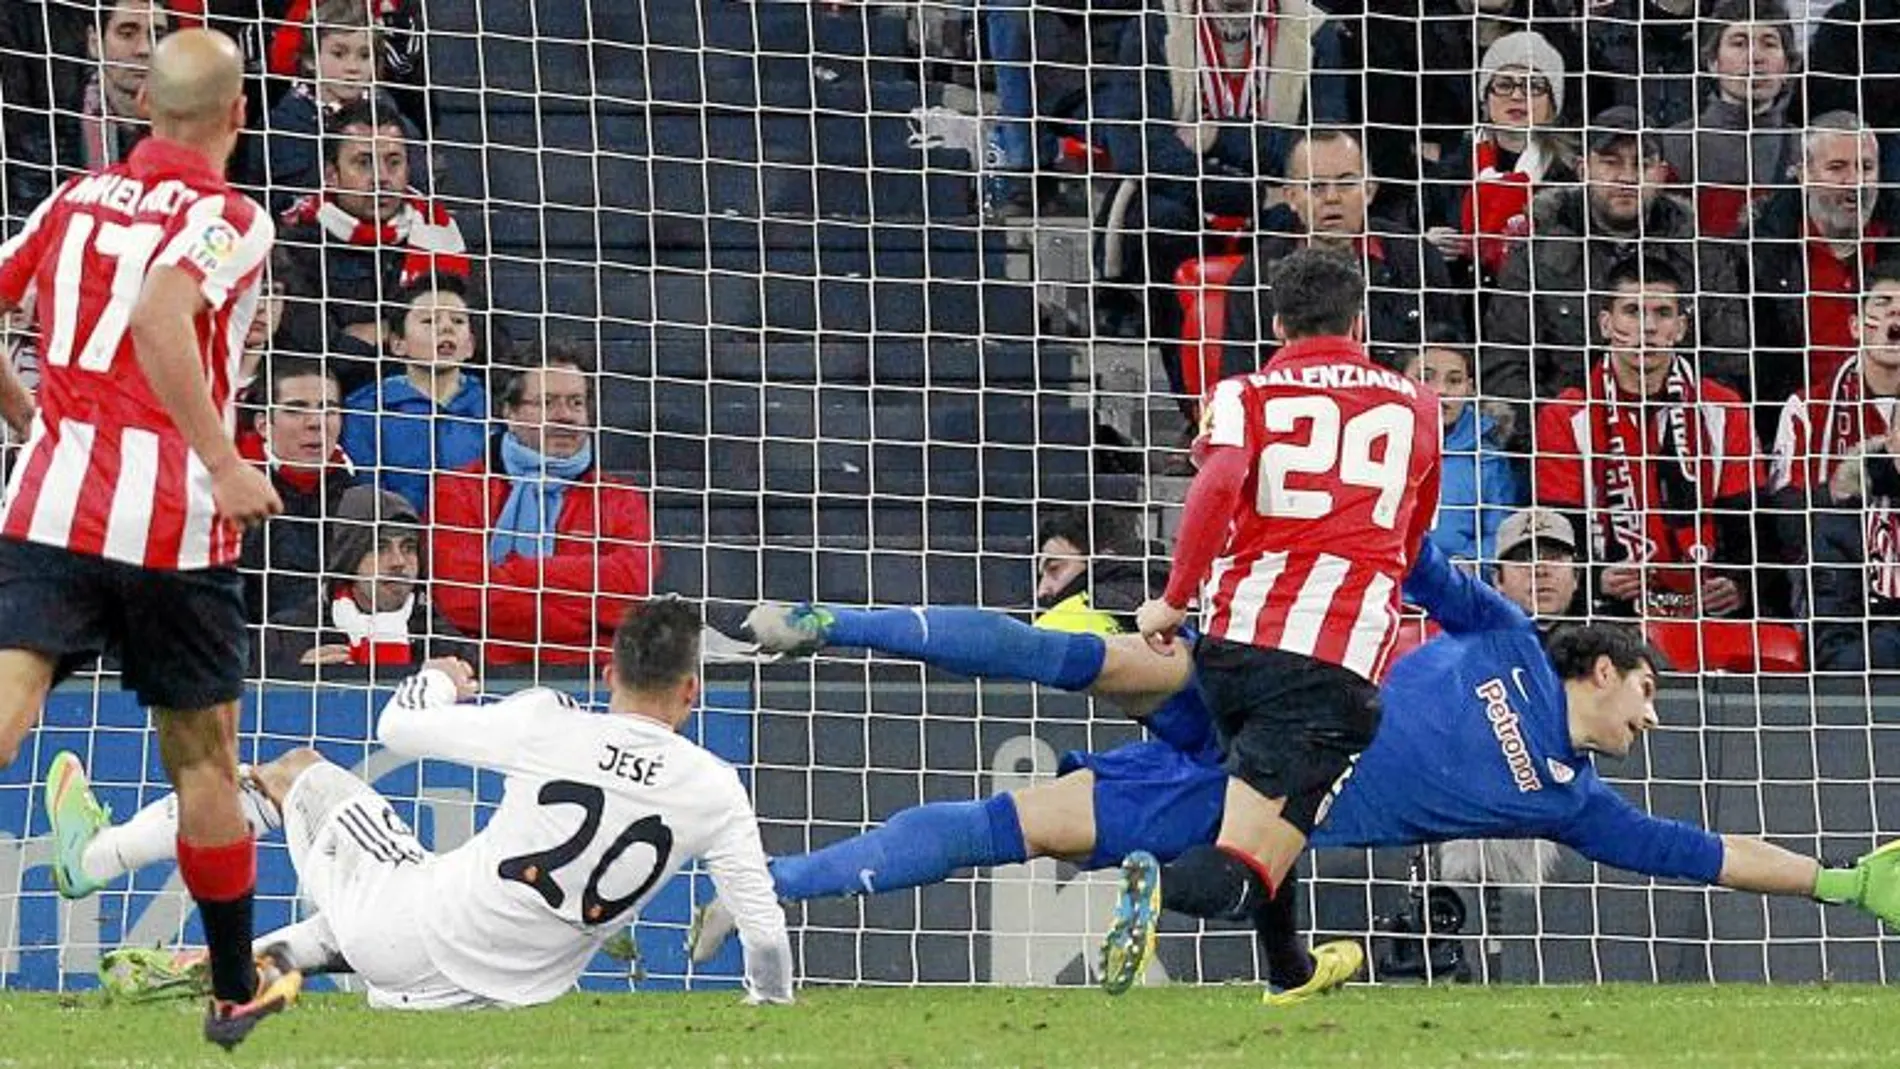 Jesé volvió a ser decisivo para el Real Madrid. Marcó su quinto gol esta temporada